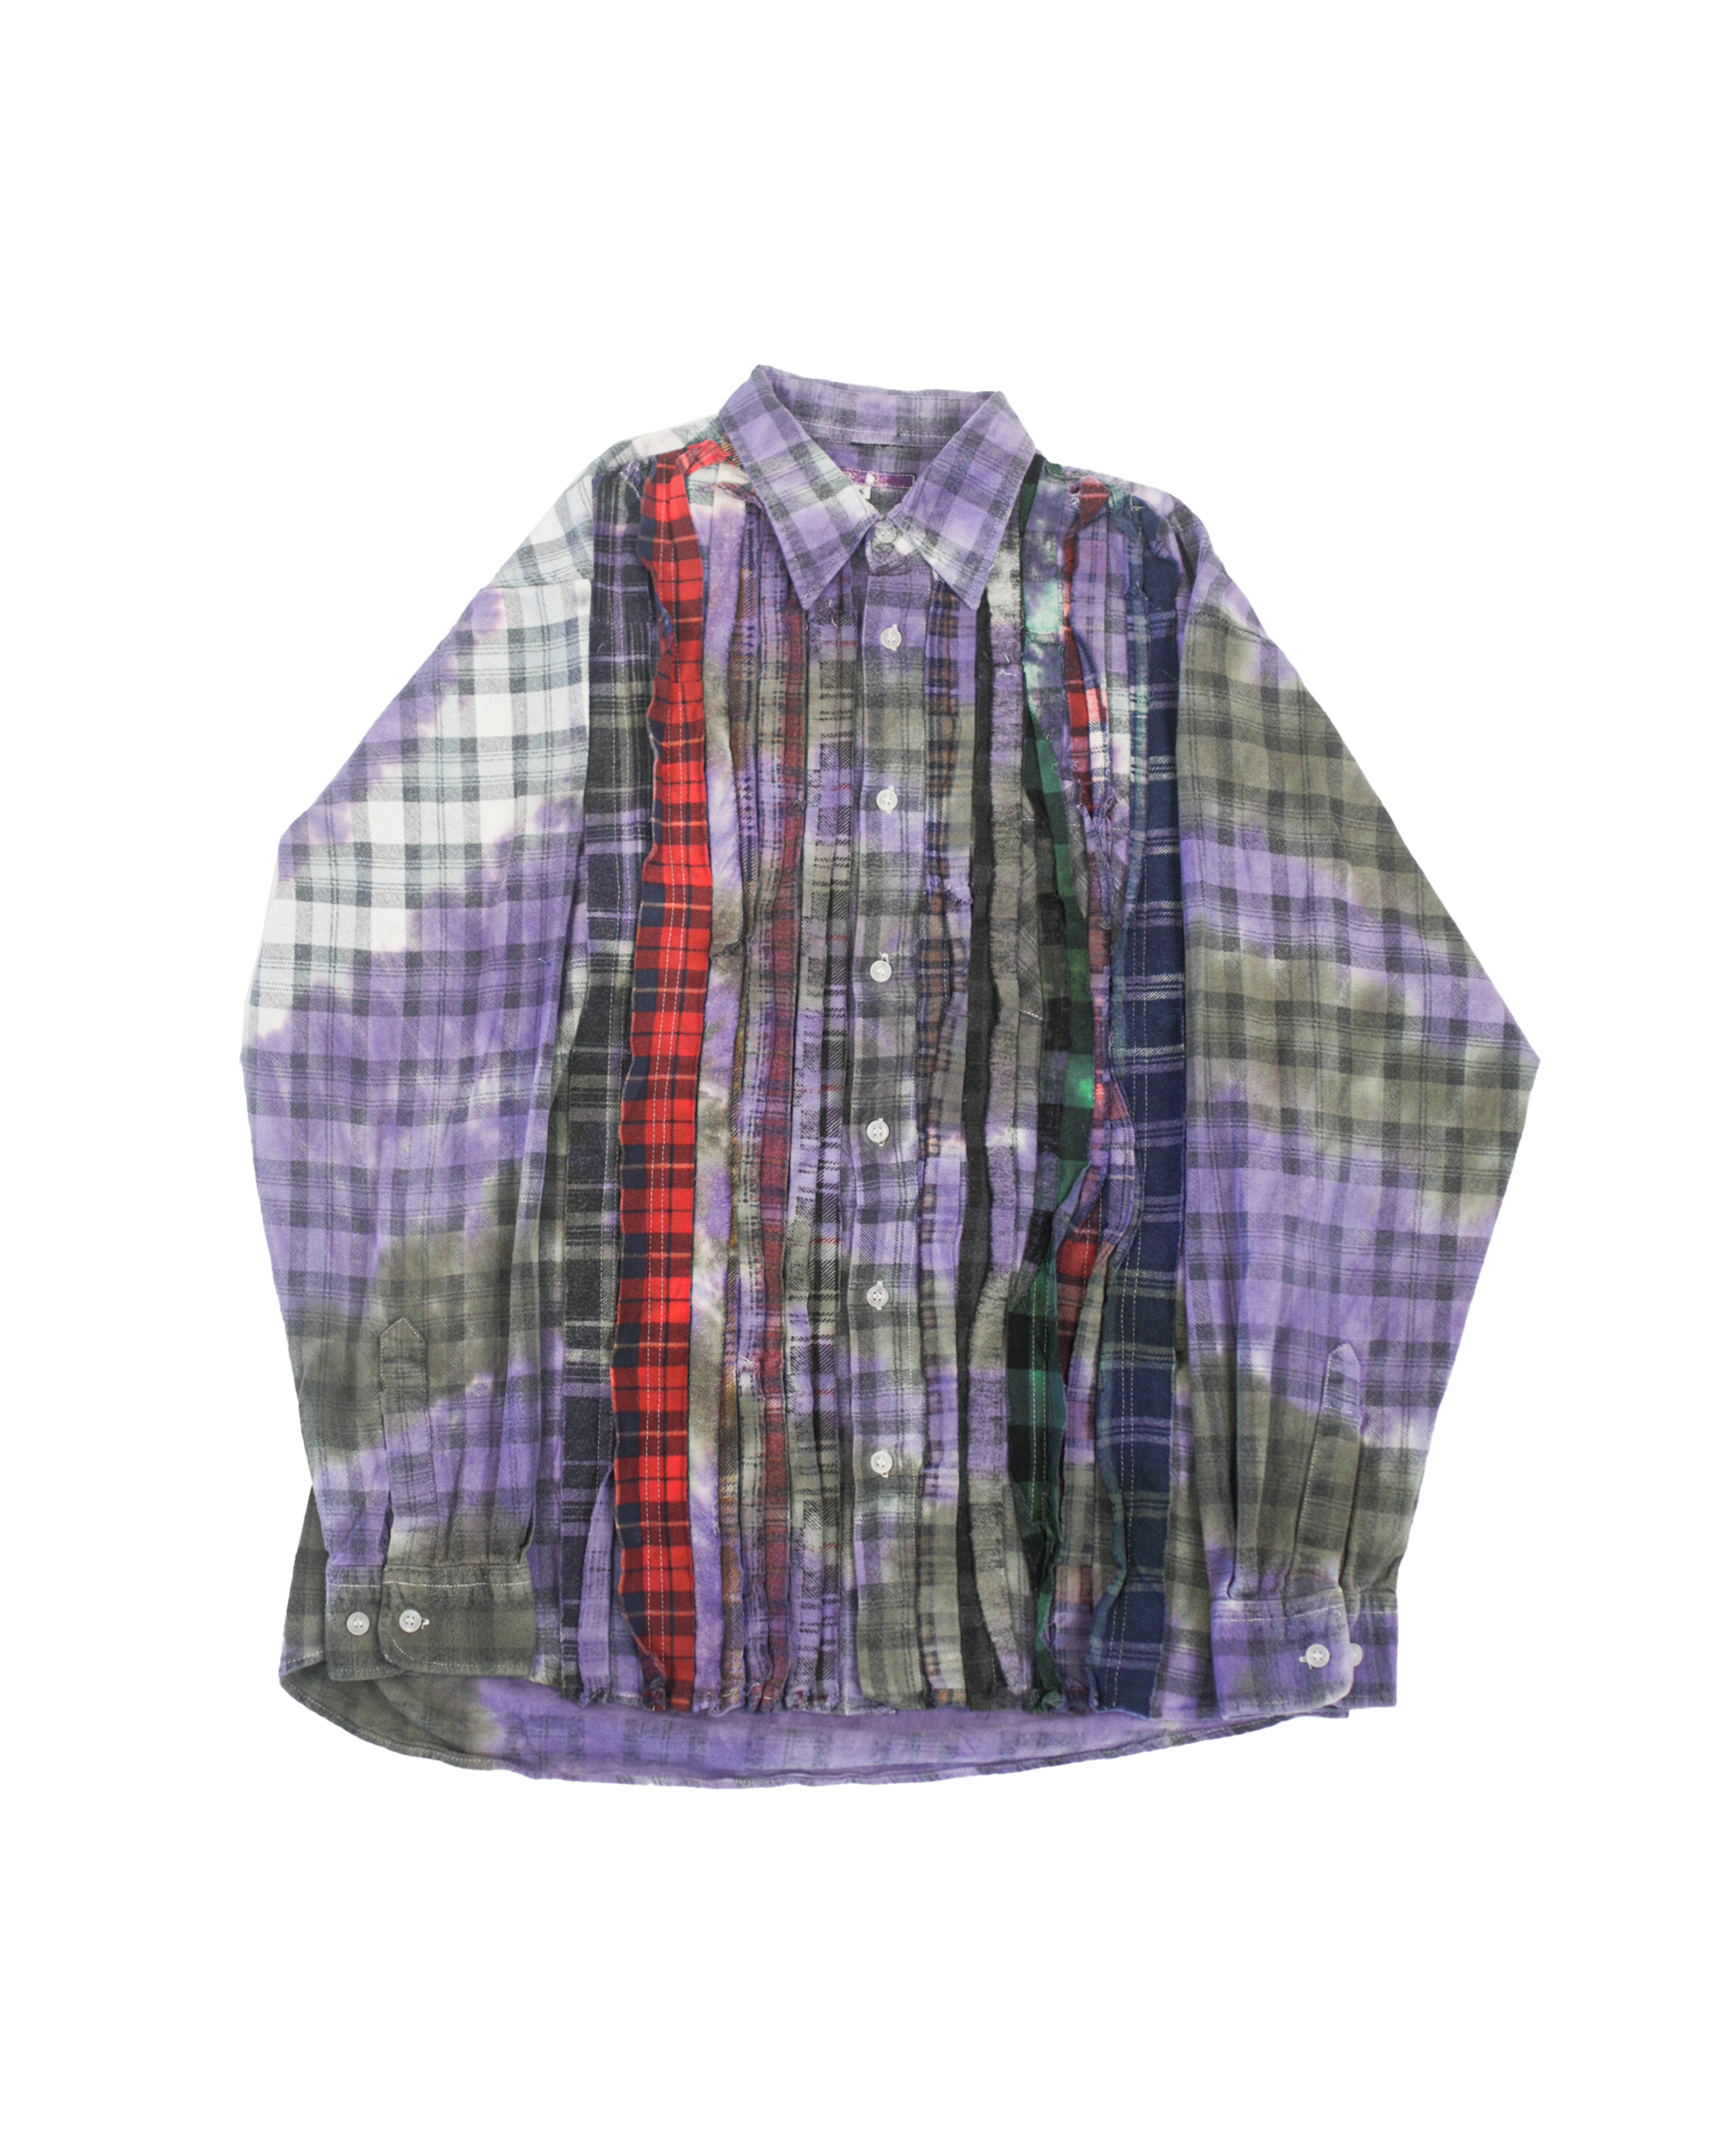 Needles Flannel Shirt - Ribbon Shirt/Tie Dye